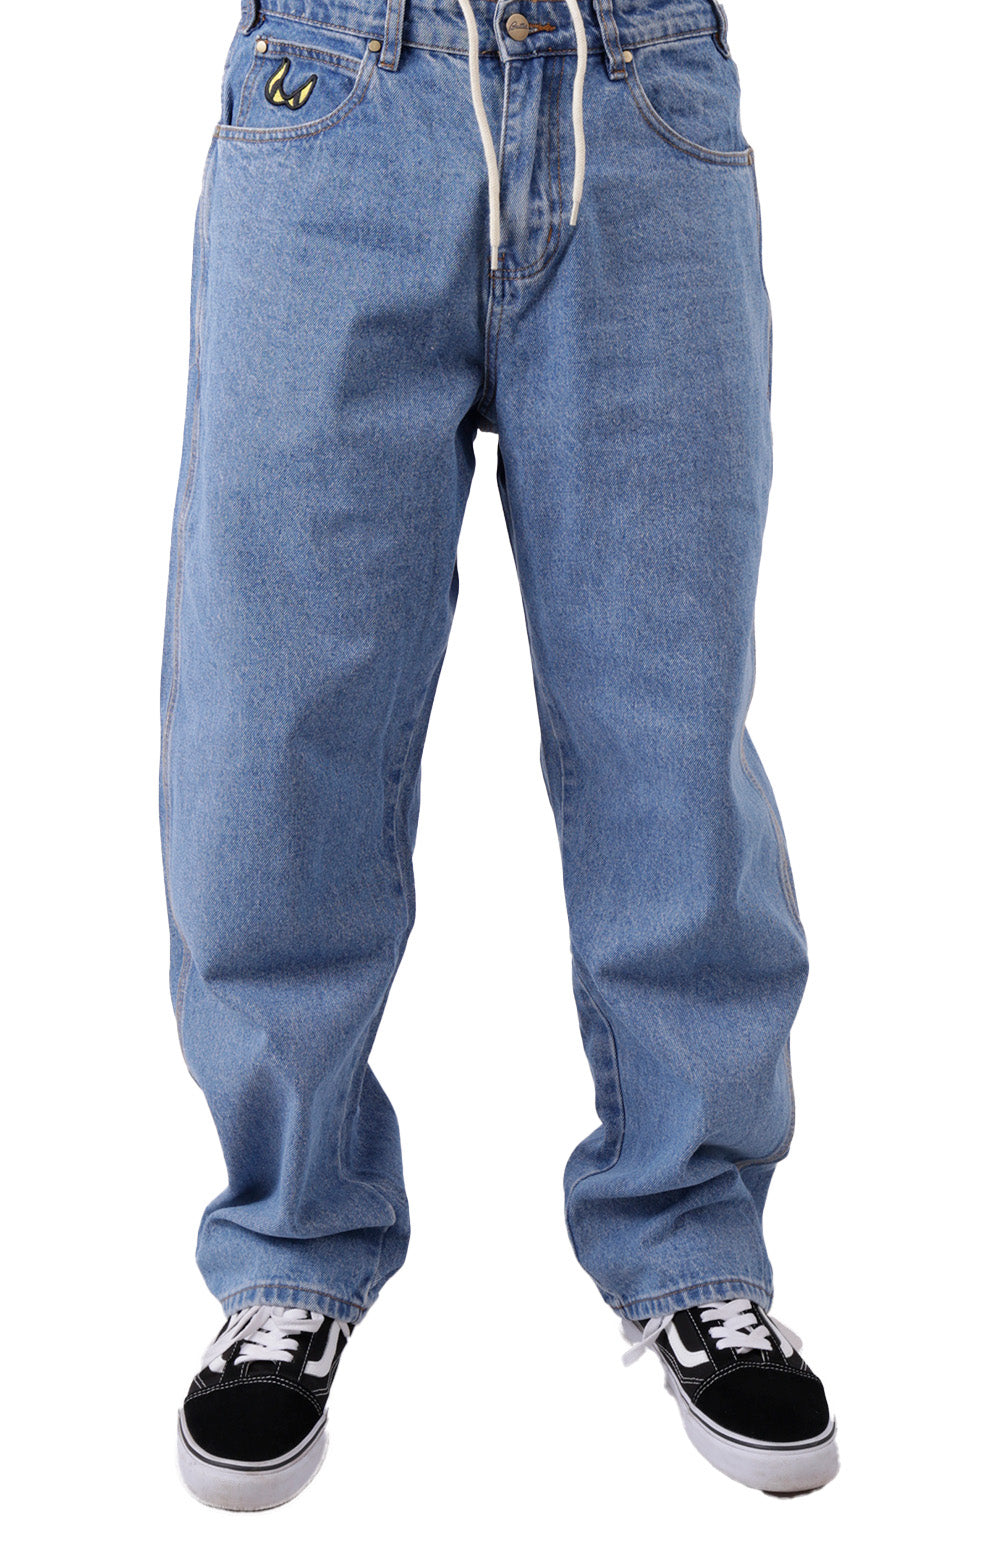 Spinner Denim Jeans - Washed Indigo